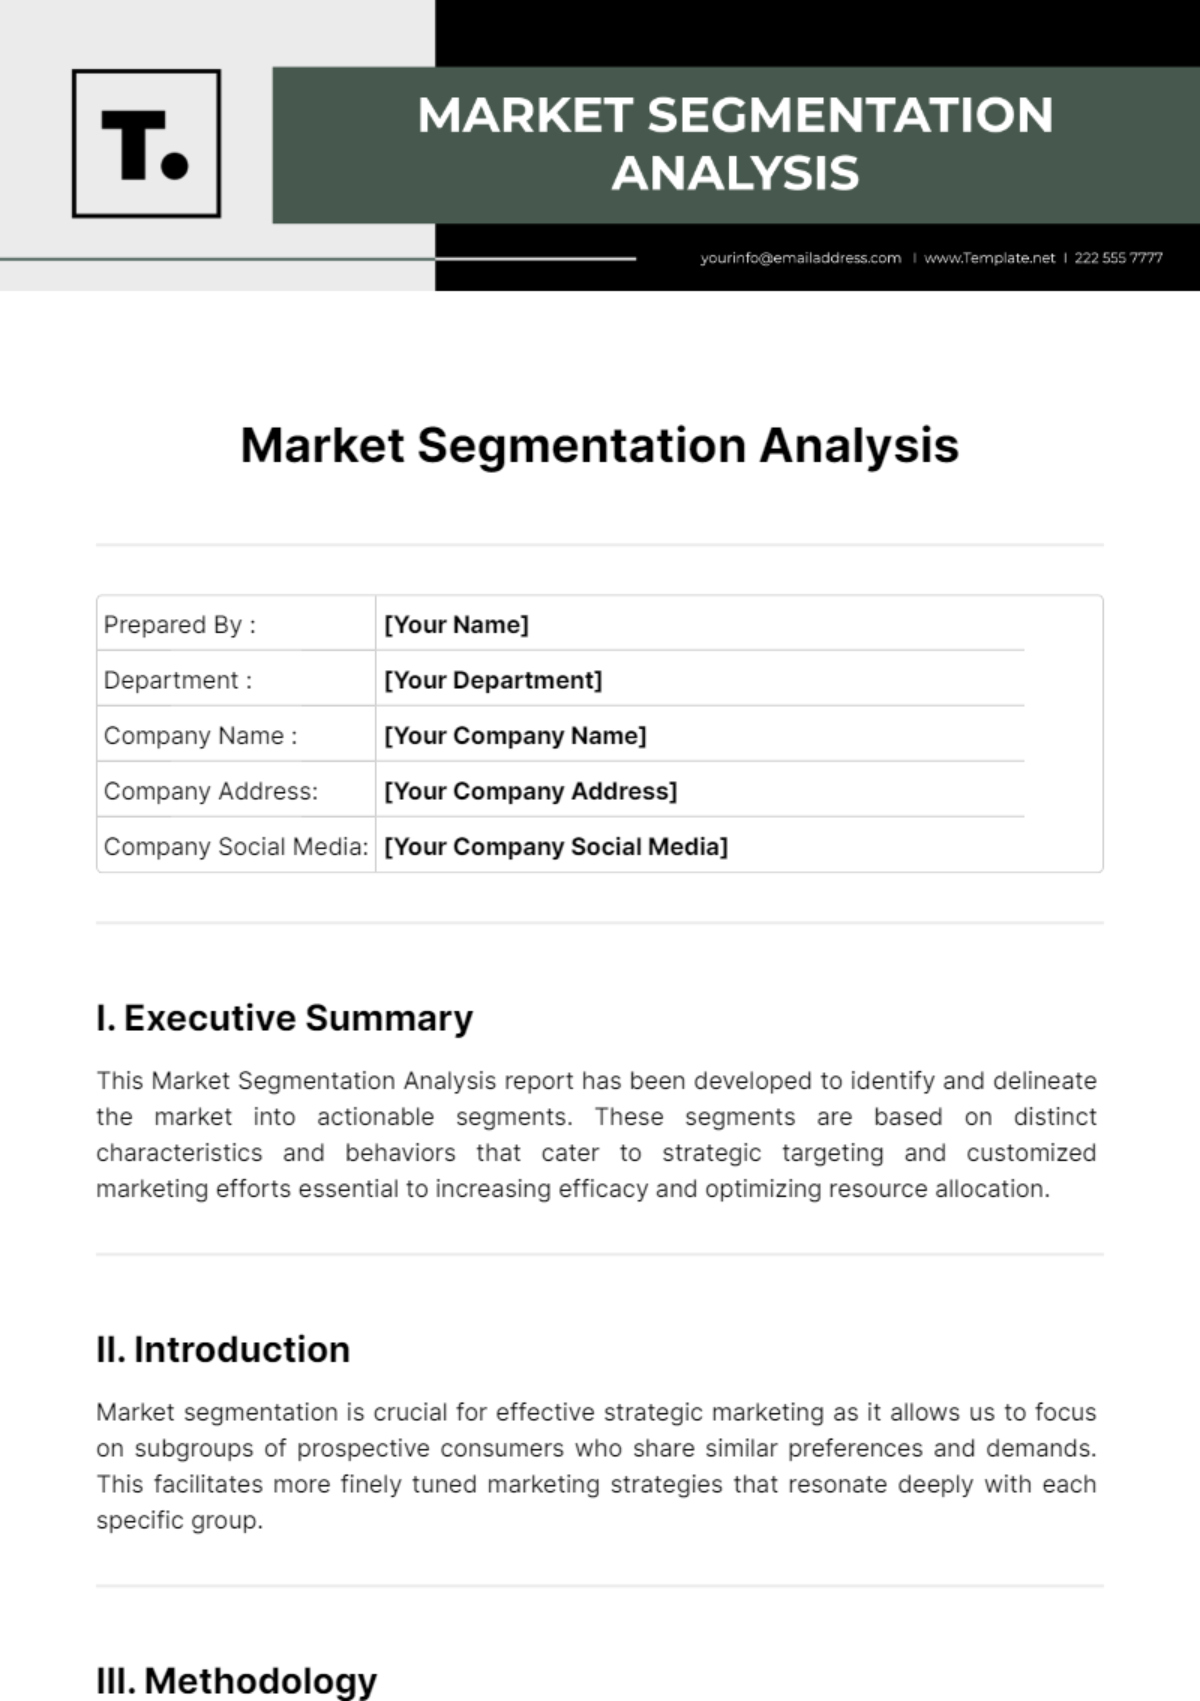 Market Segmentation Analysis Template